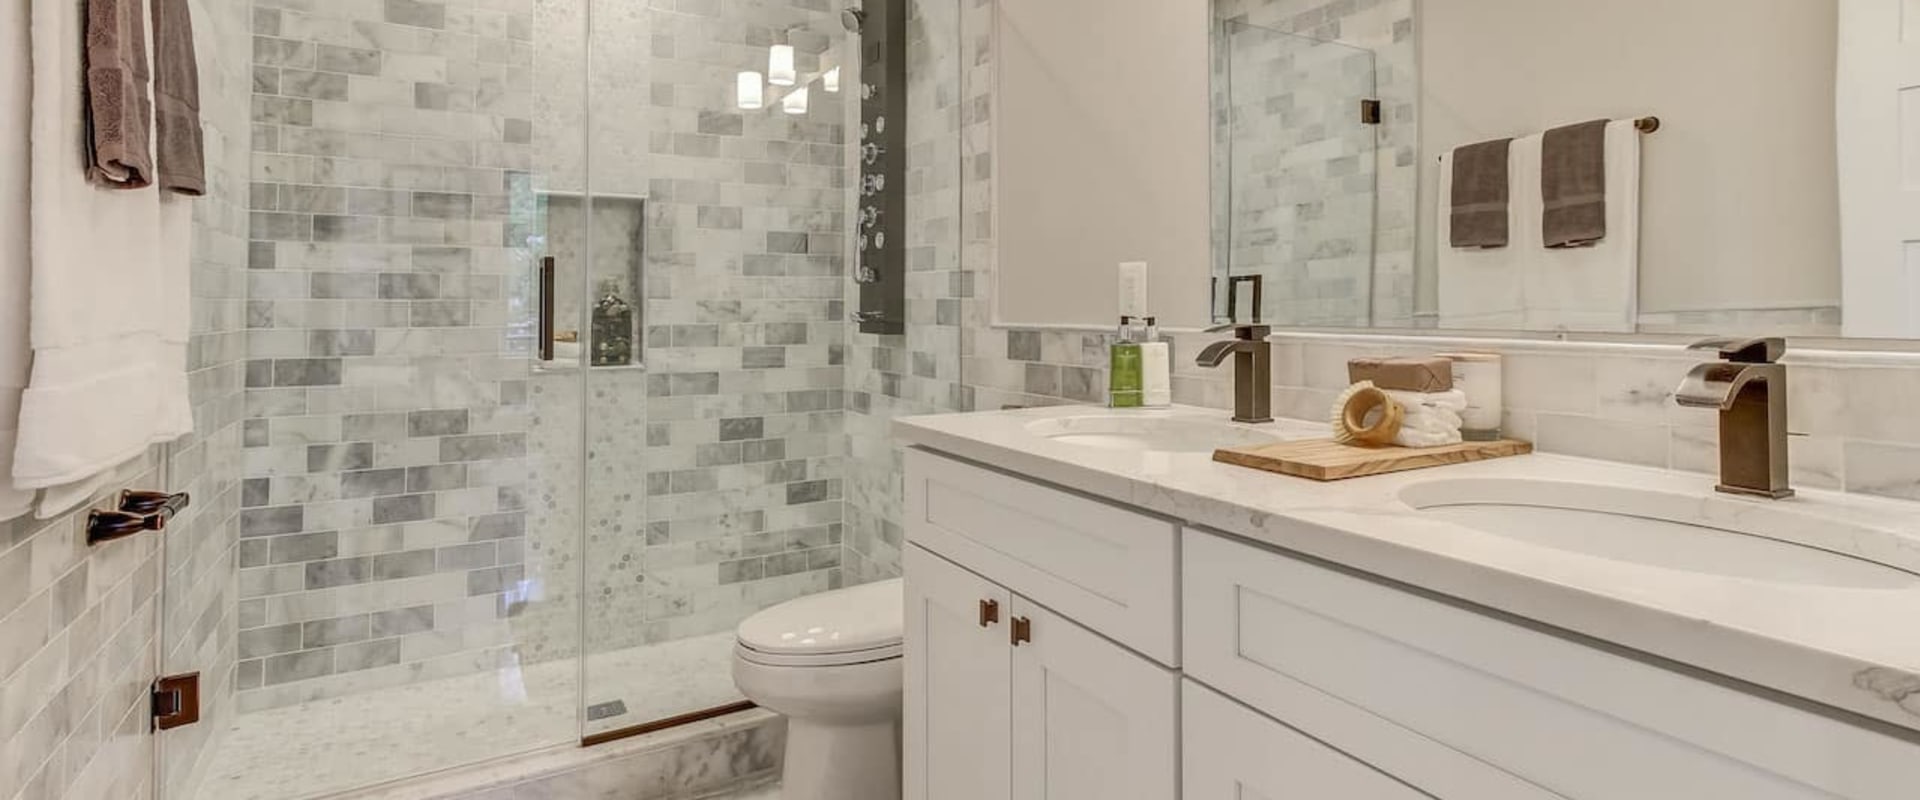 Budget-Friendly Bathroom Renovation: Expert Tips